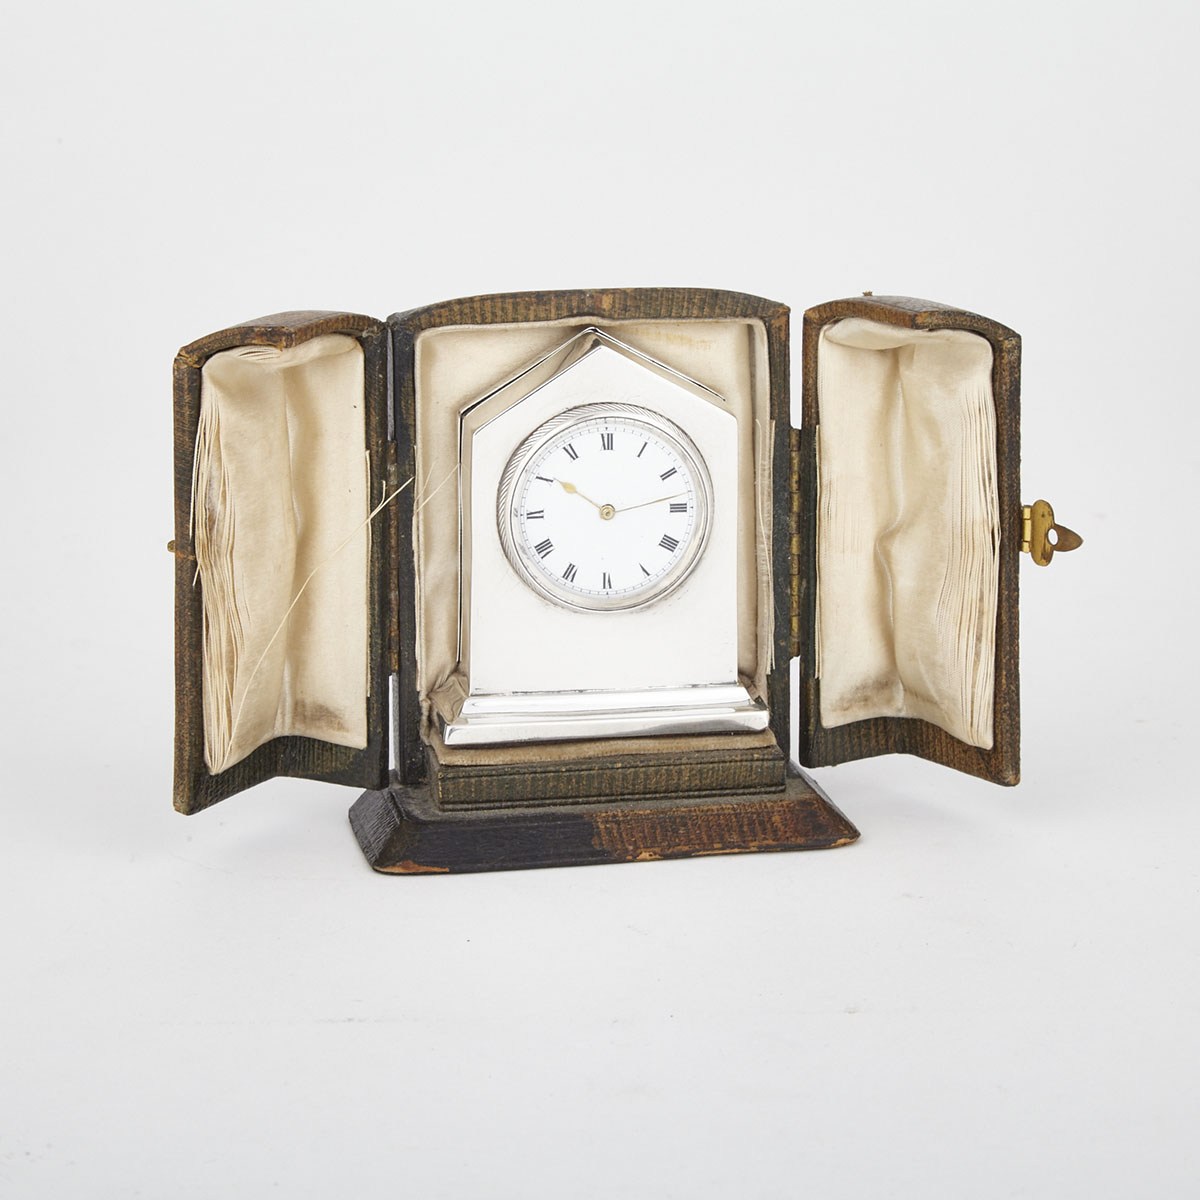 Edwardian Silver Cased Desk Clock, Henry Williamson Ltd., Birmingham, 1909